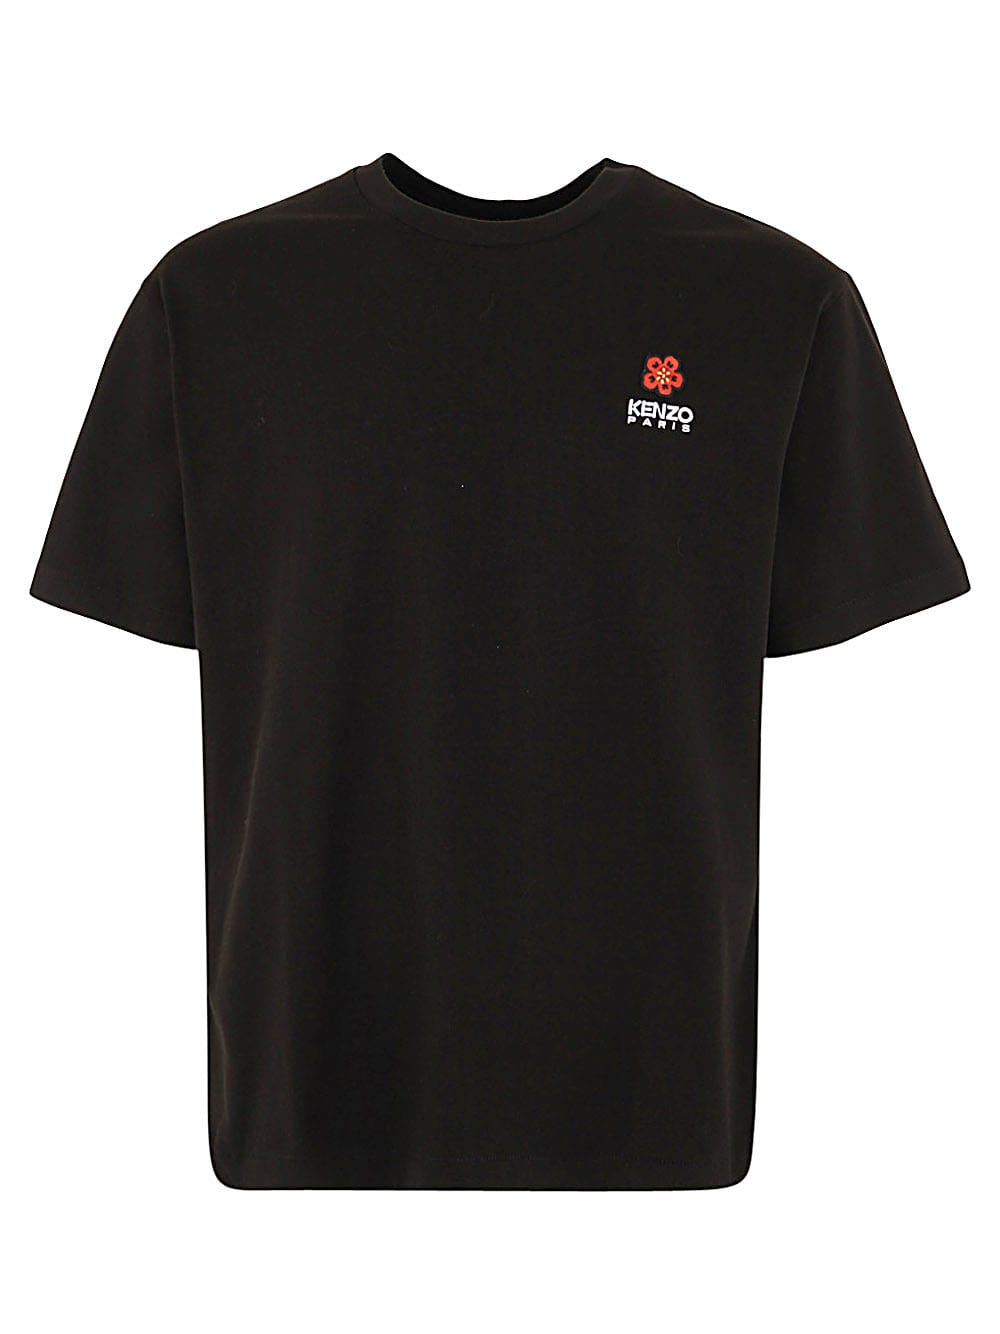 Kenzo Crest Logo Classic T Shirt